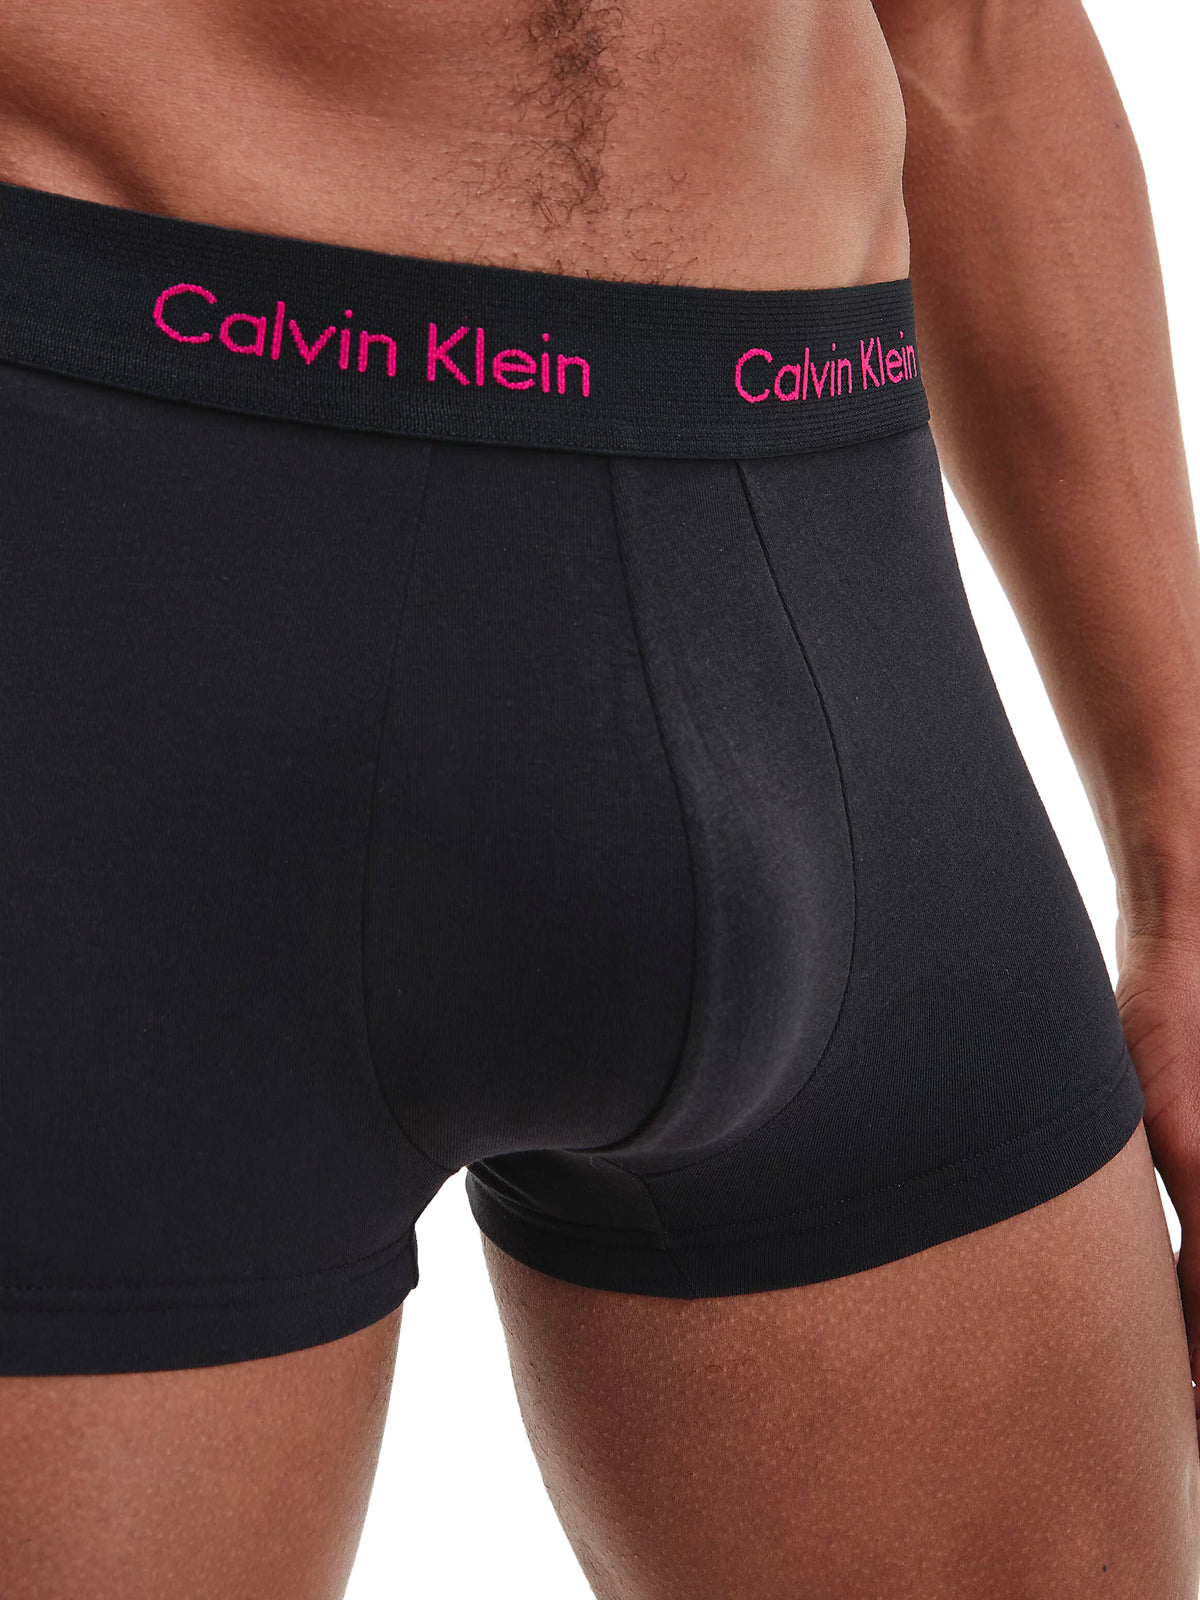 Mens Calvin Klein Boxer Shorts Low Rise Trunks 3 Pack, 03, U2664G, B-Groovy Plum/Bright Rose/Blue Logo